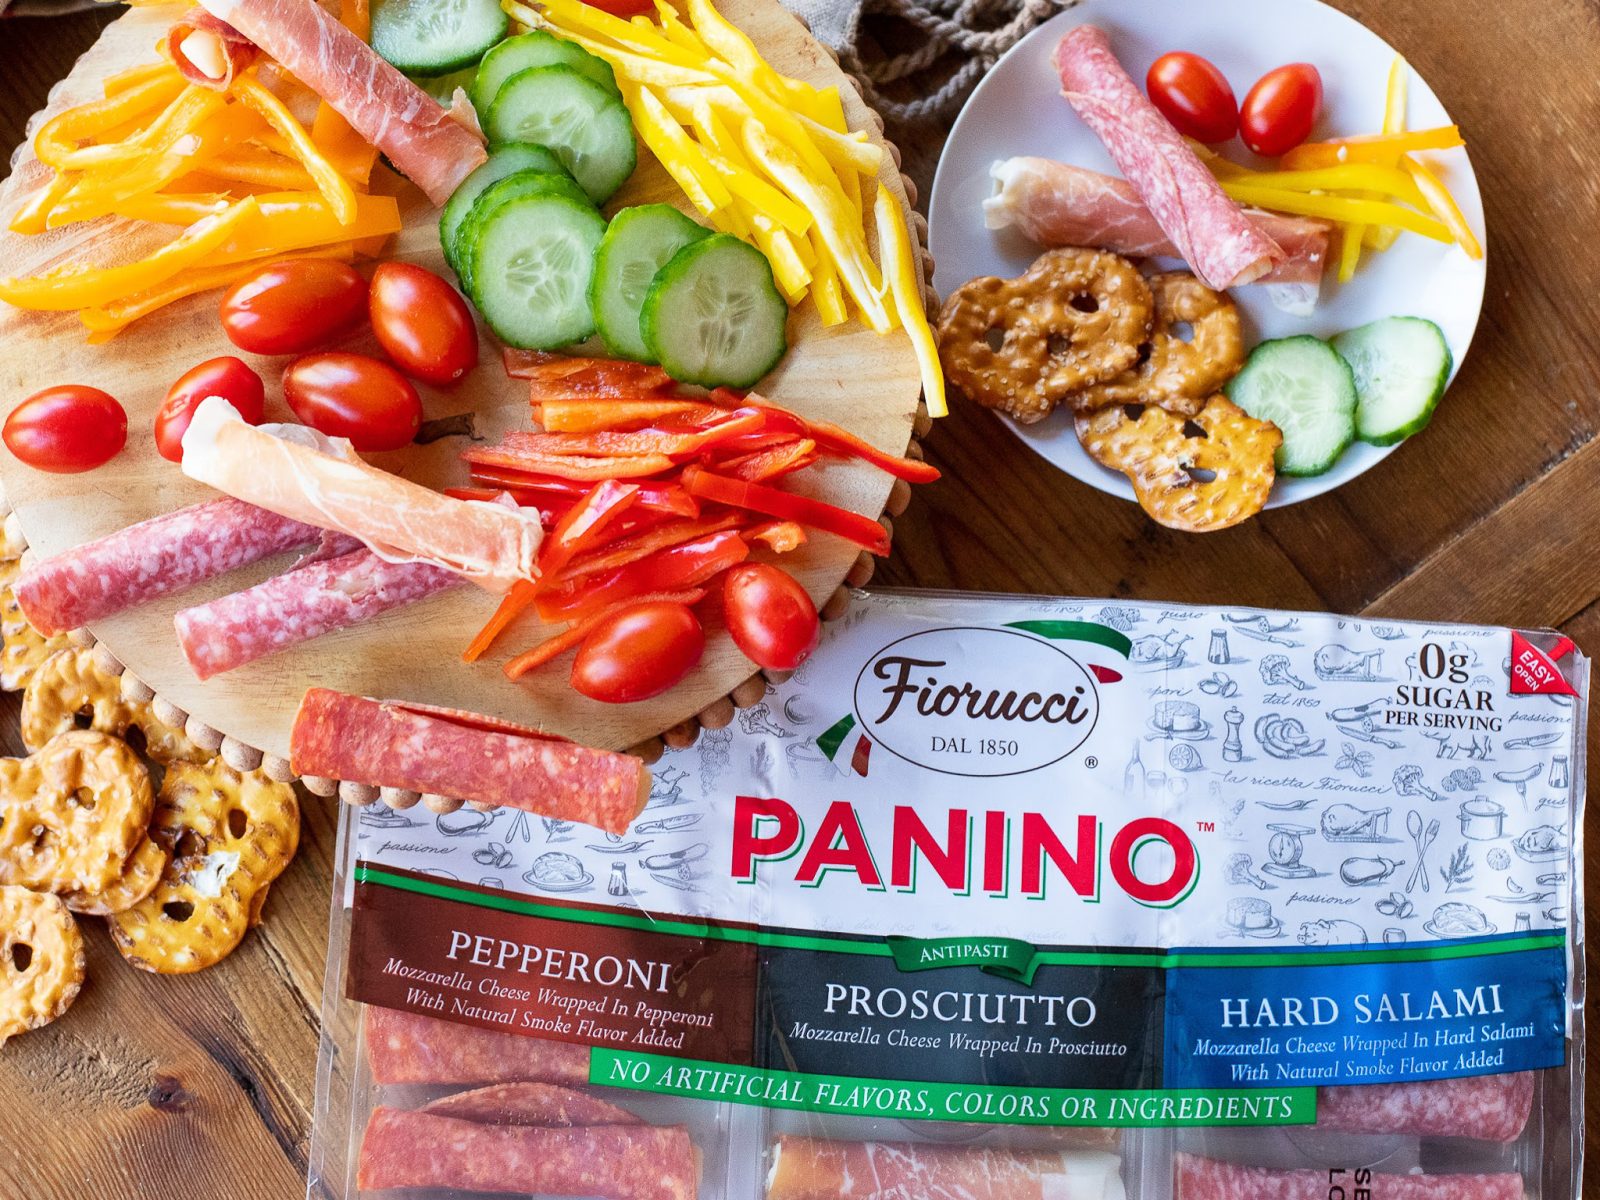 Super Deal On Fiorucci Panino Assortment – Save $7 At Publix